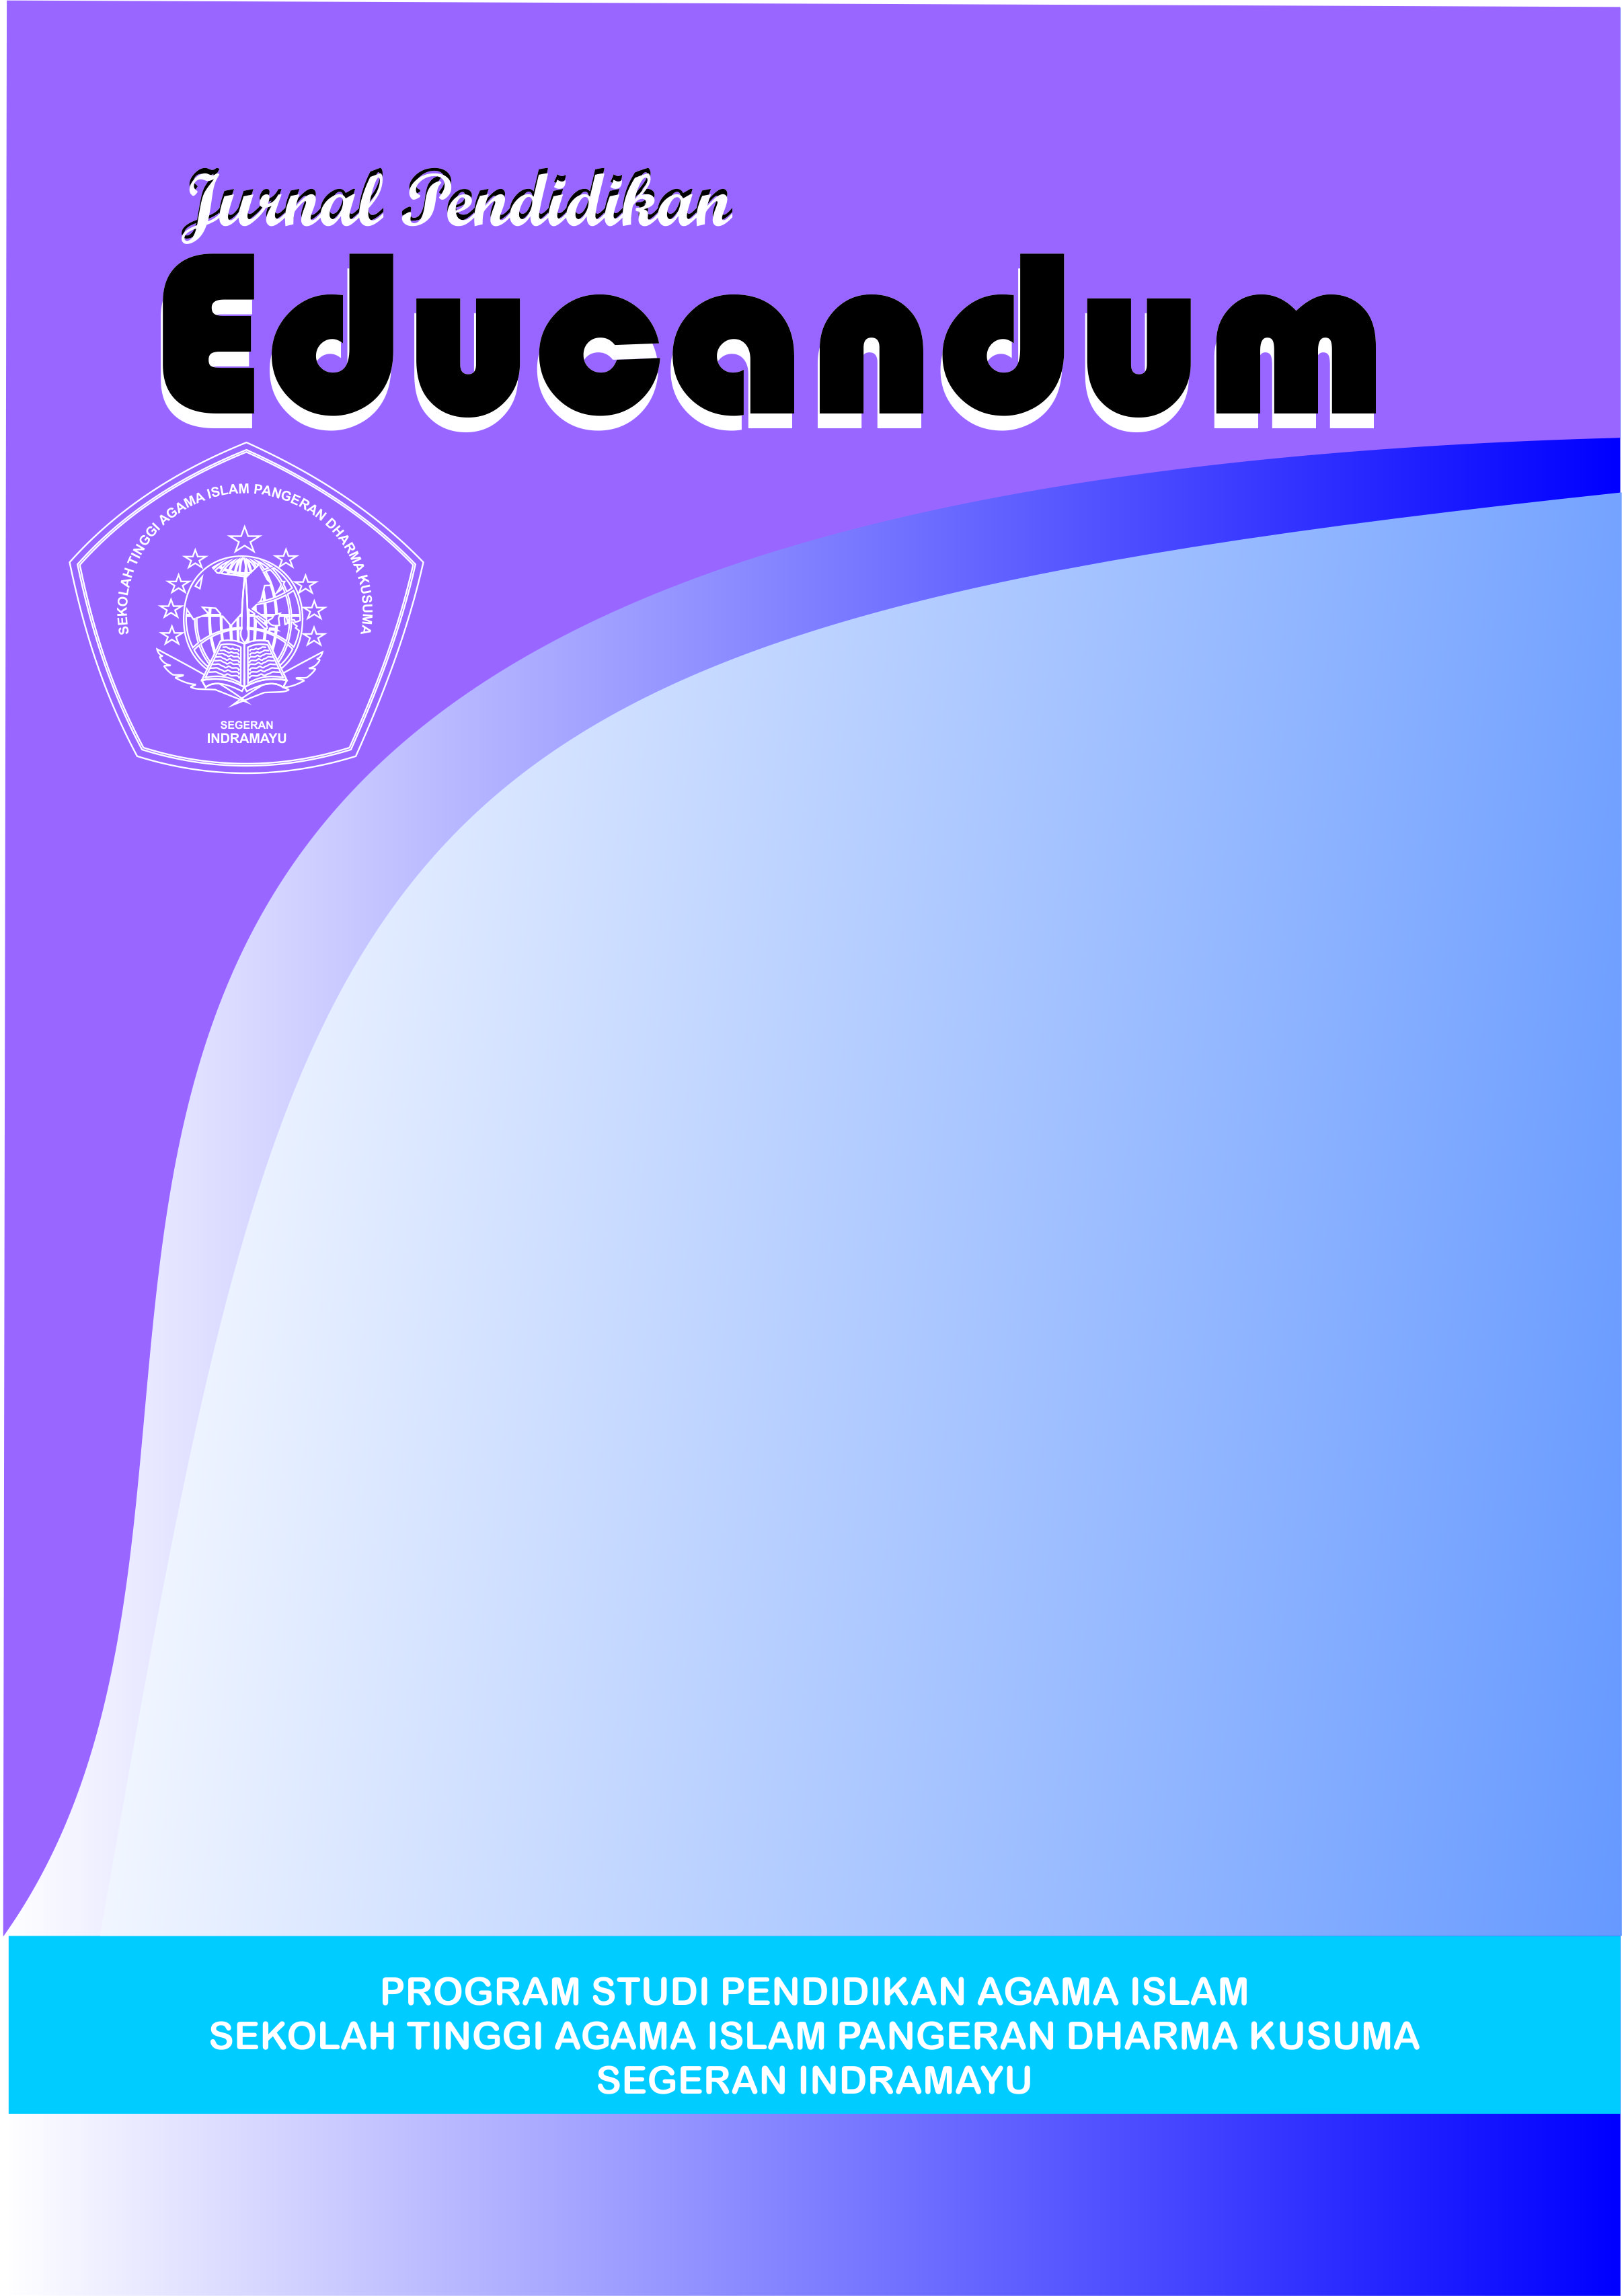 					View Vol. 3 No. 1 (2021): Jurnal Pendidikan Educandum
				